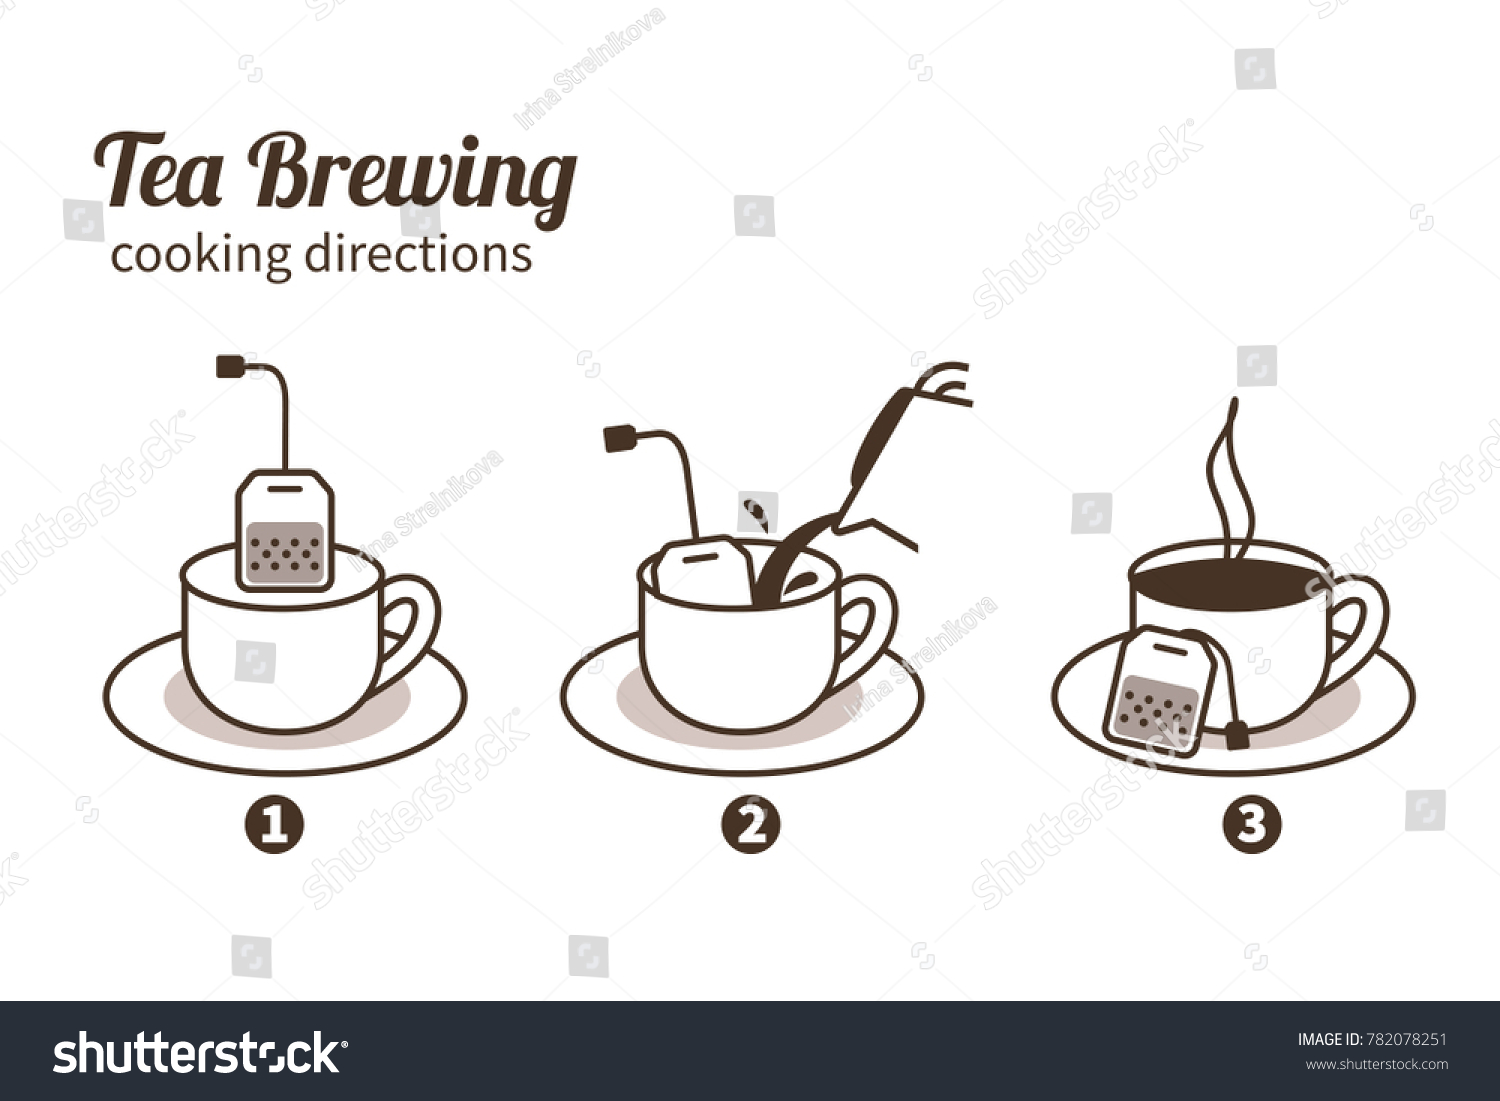 Tea Brewing Guide